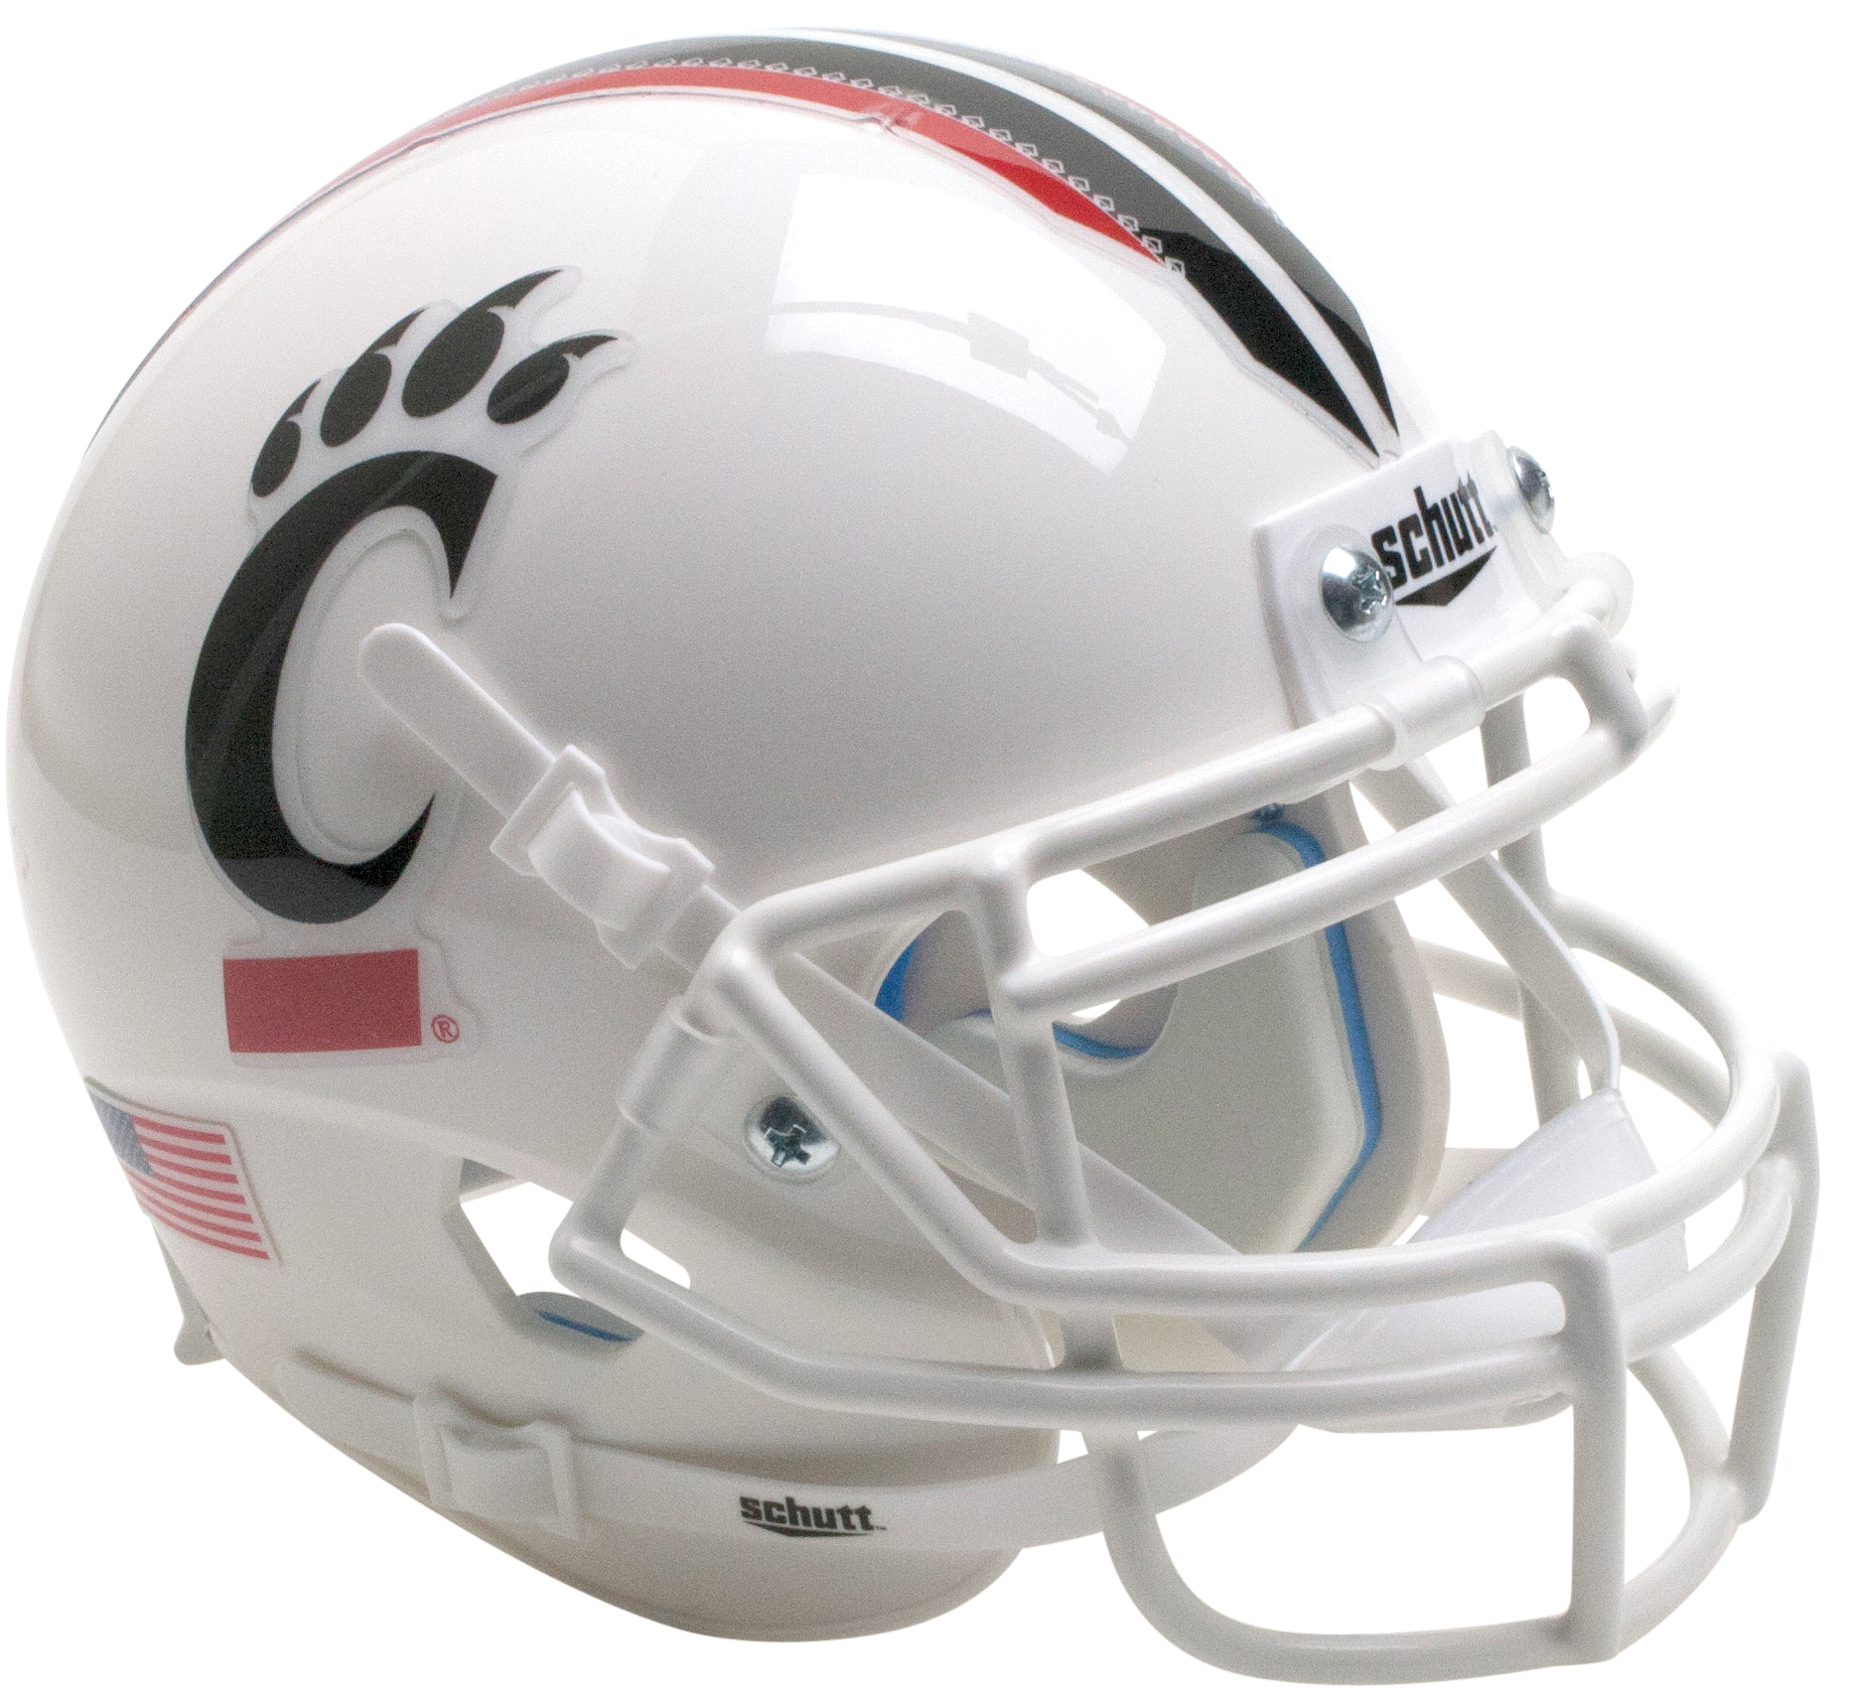 Cincinnati Bearcats Authentic College XP Football Helmet Schutt <B>Tribal Stripe</B>